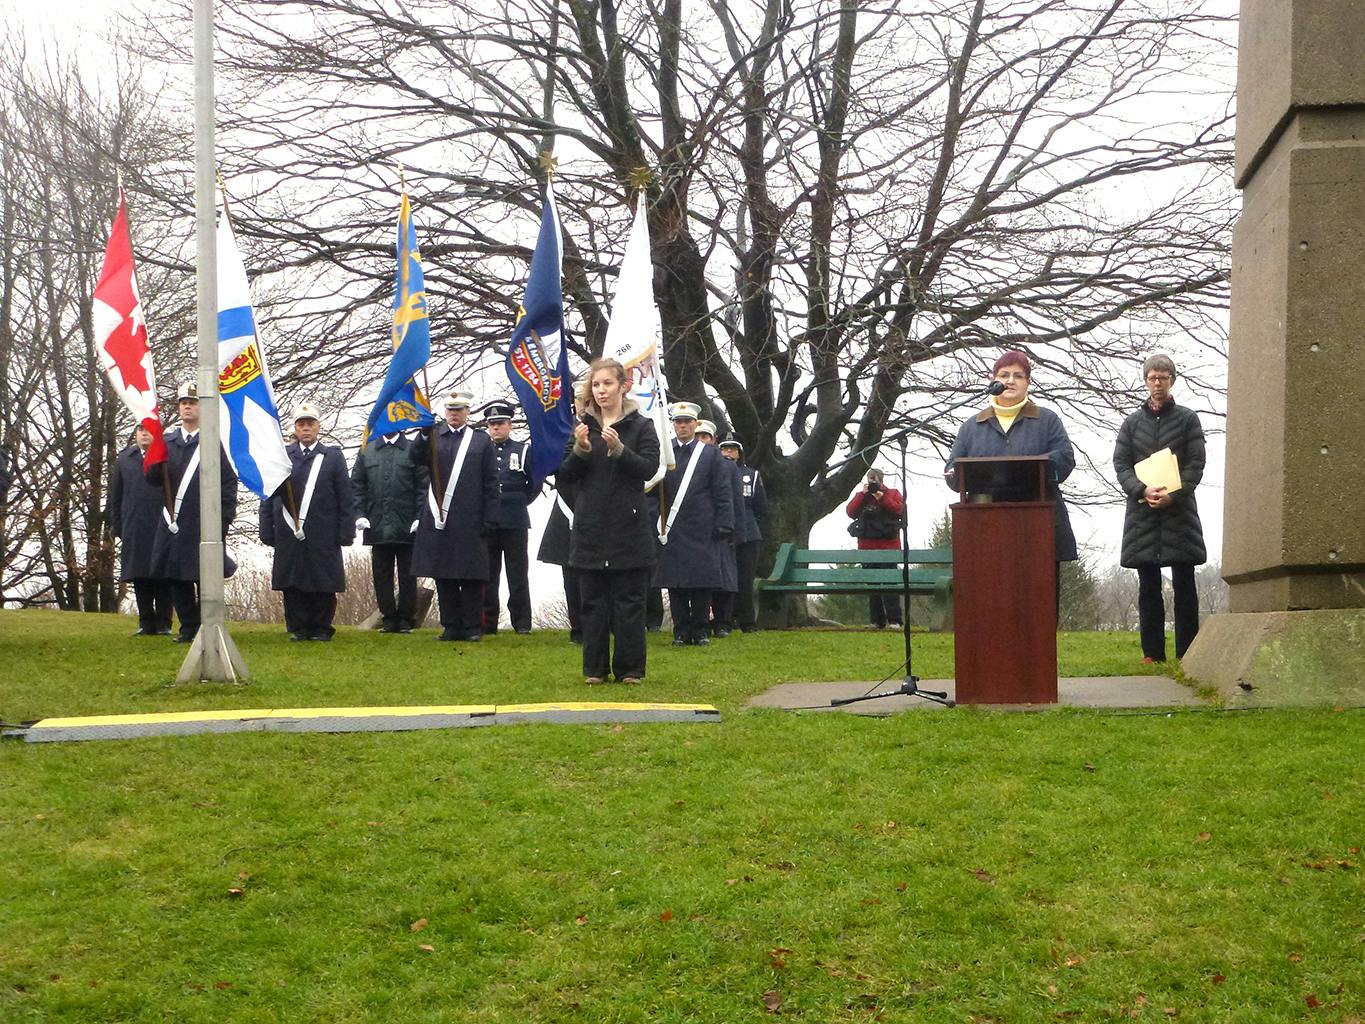 Halifax Explosion Memorial Ceremony